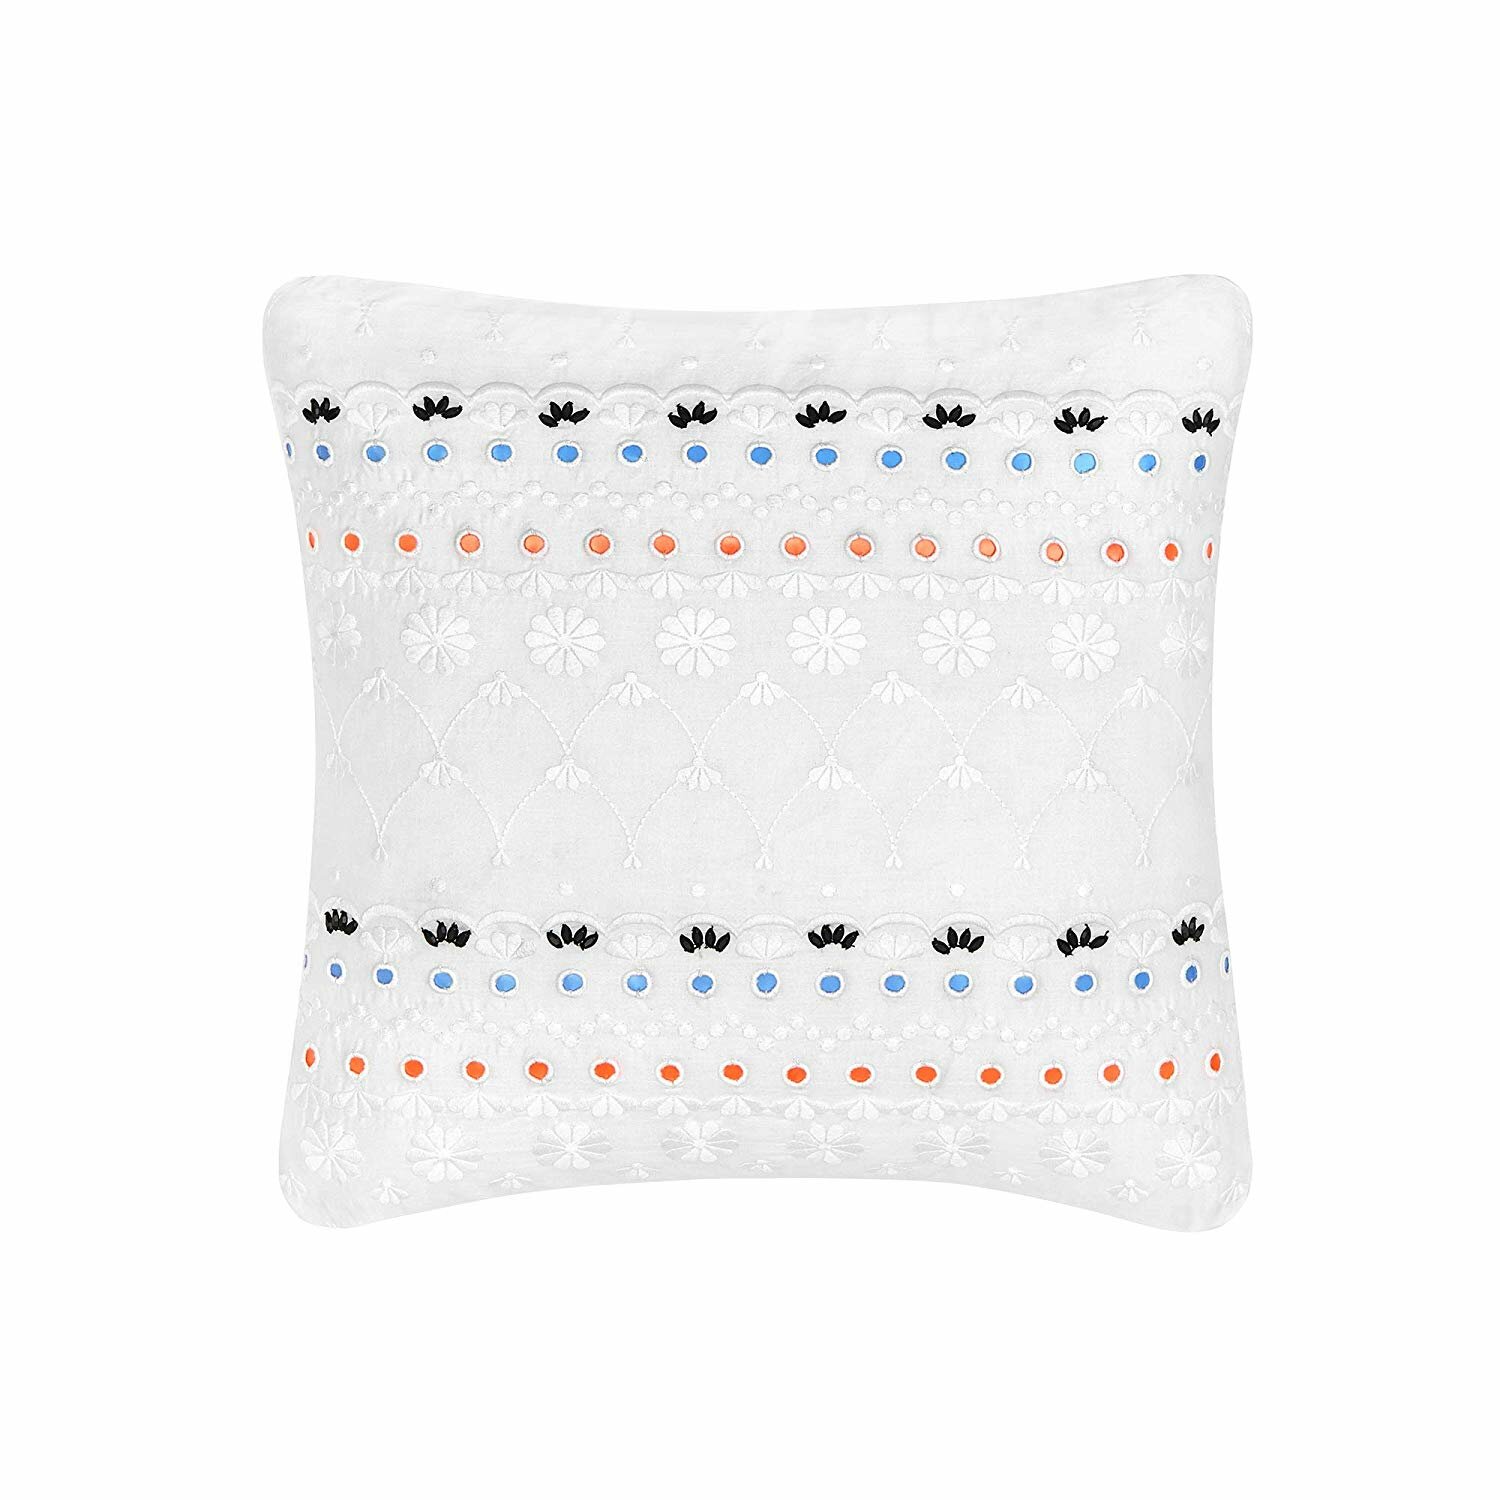 Kate Spade New York1 Pillow 16" SQUARE 100% Cotton White